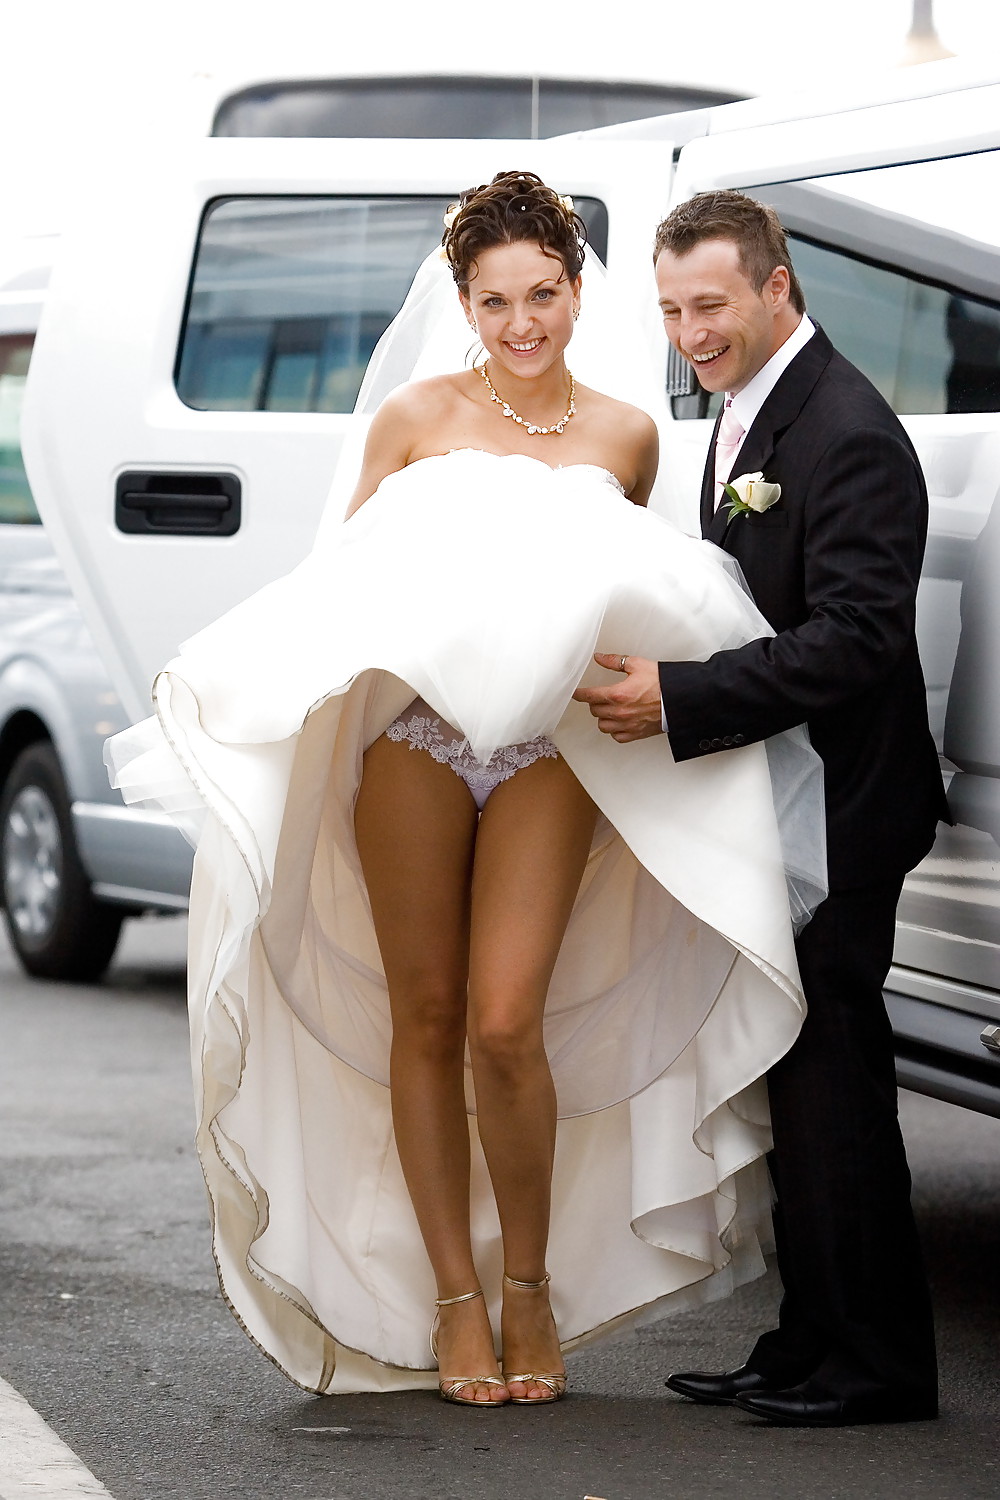 Sex BRIDES wedding voyeur upskirt white panties and bra image 39073939 pic